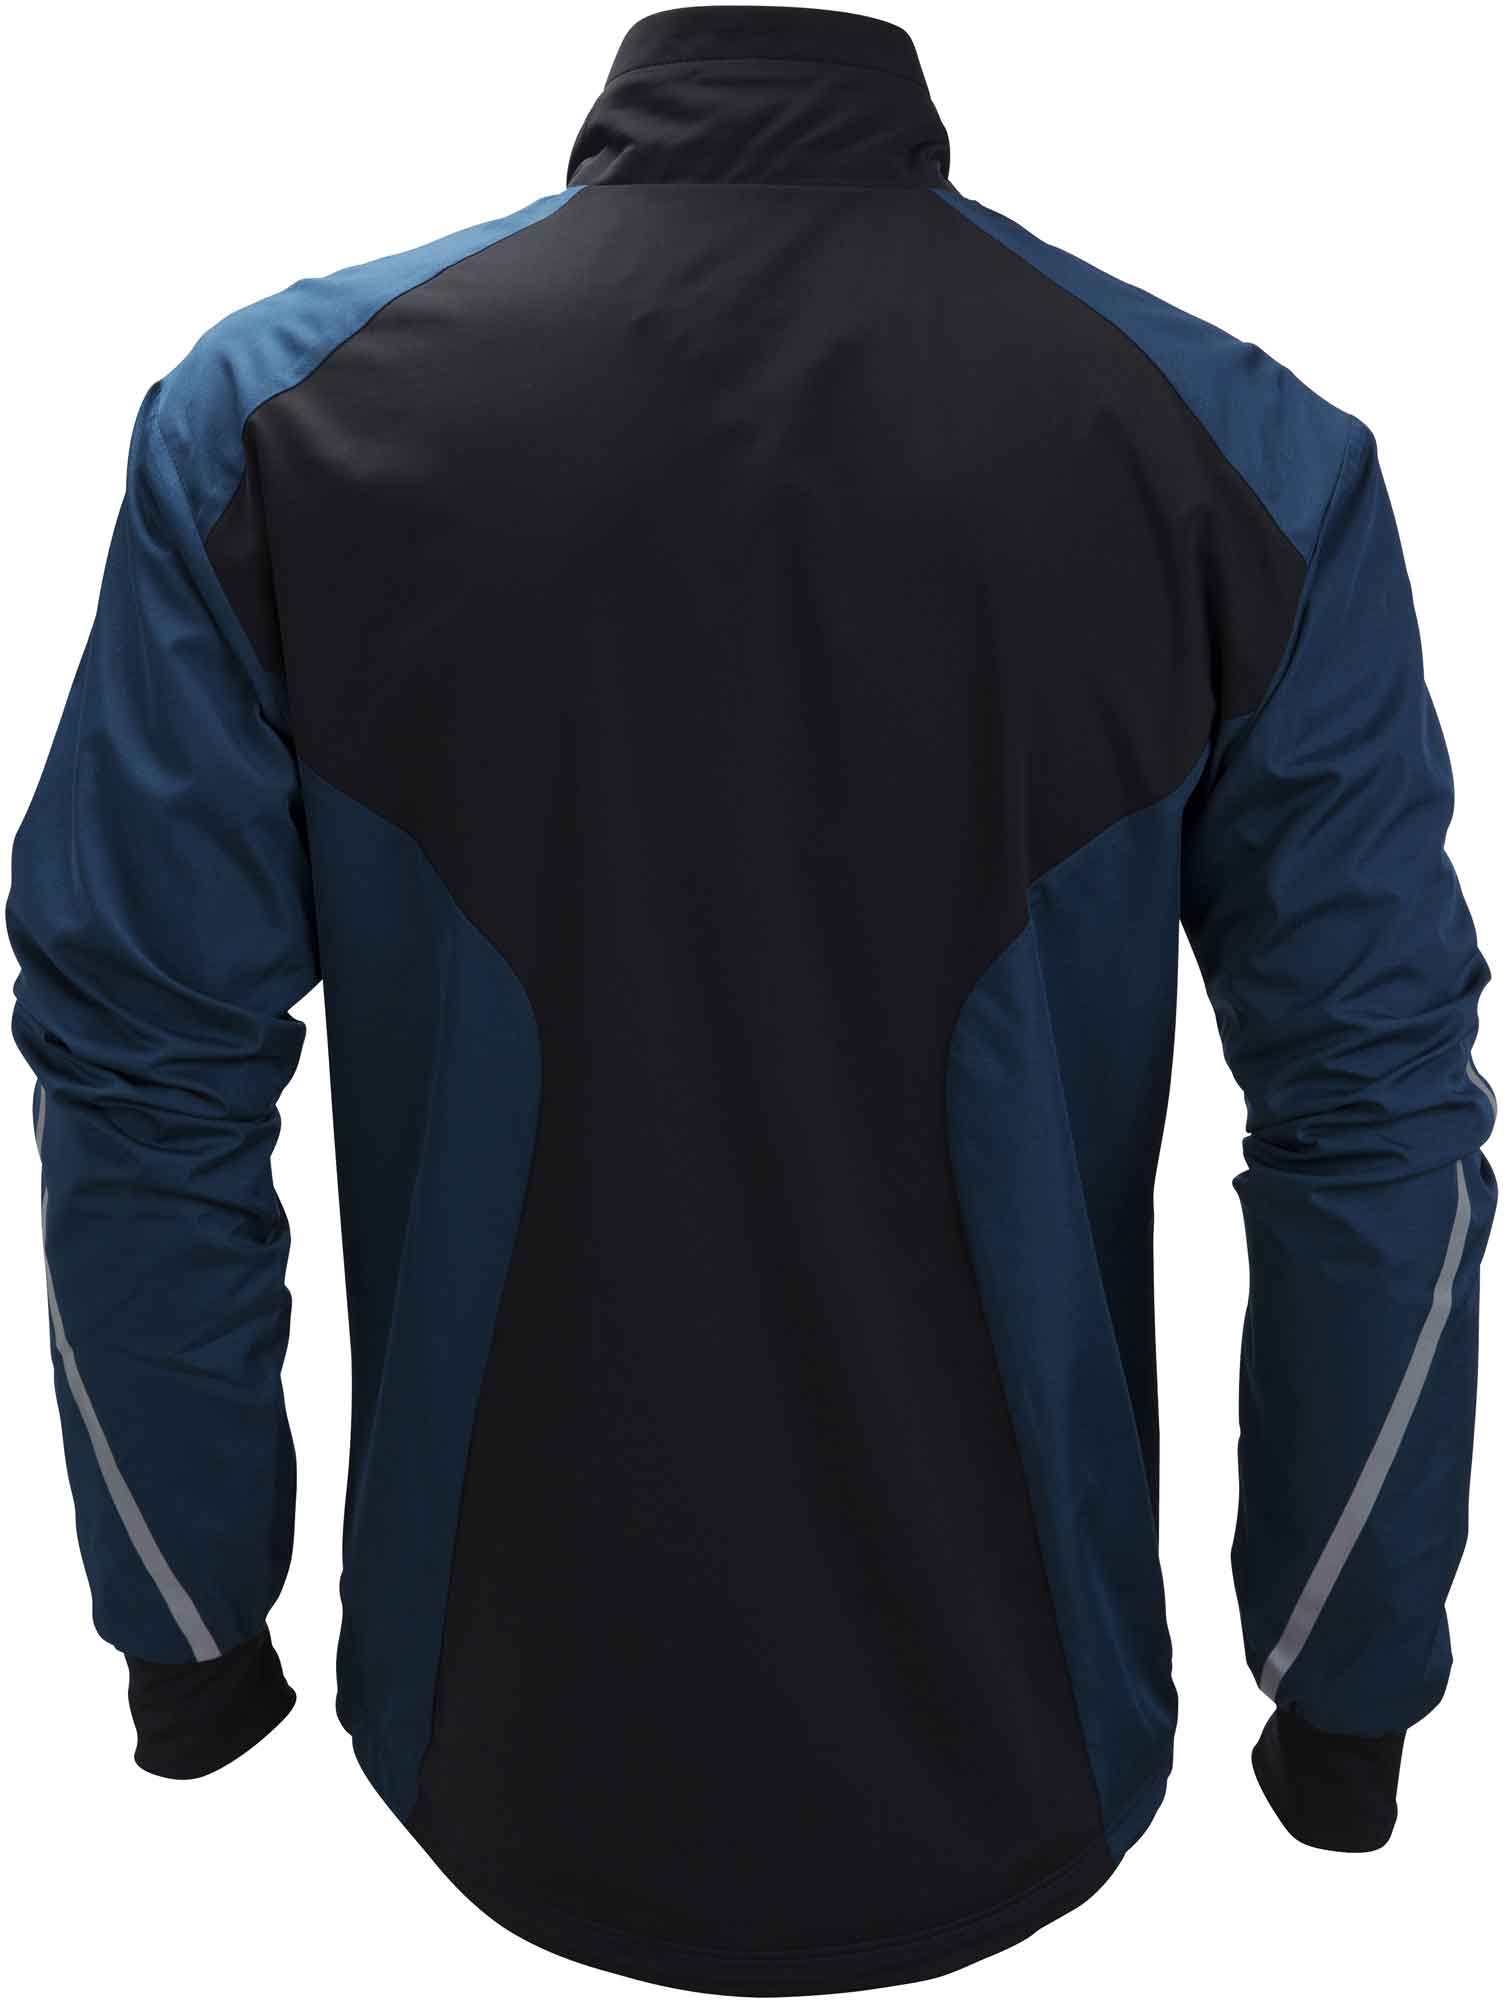 Men's multisport jacket